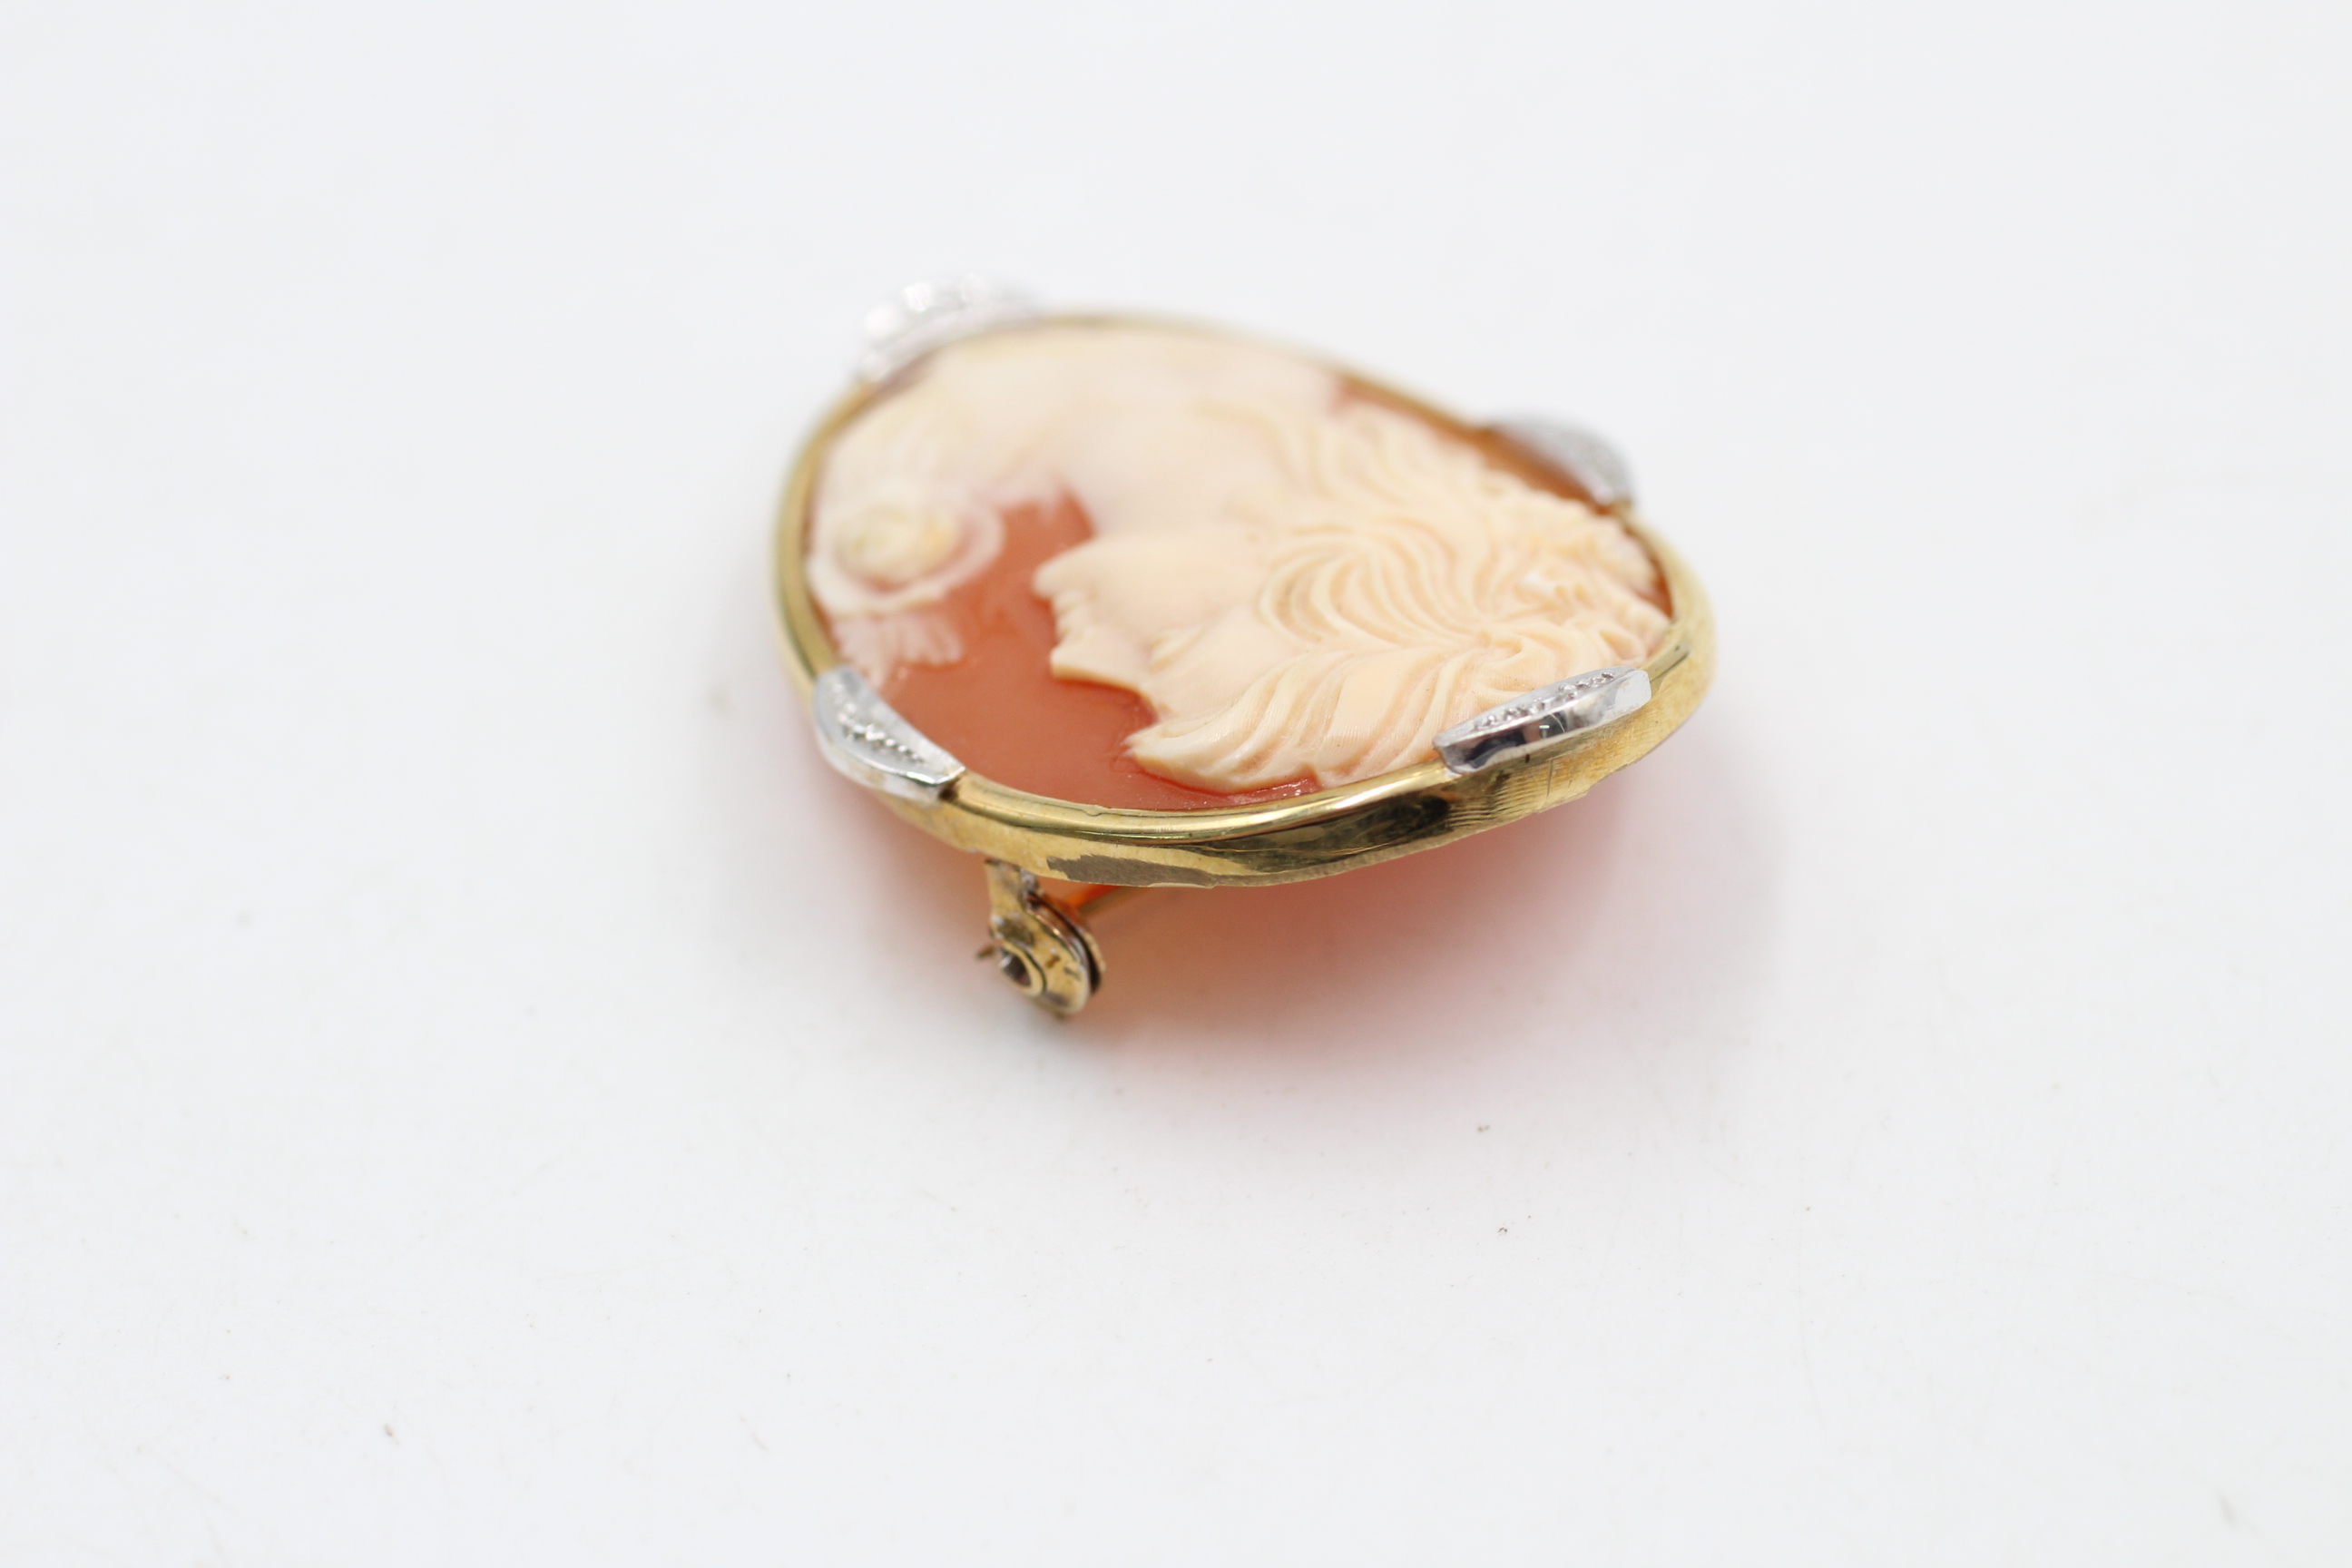 9ct gold diamond cameo brooch (5.8g) - Image 3 of 4